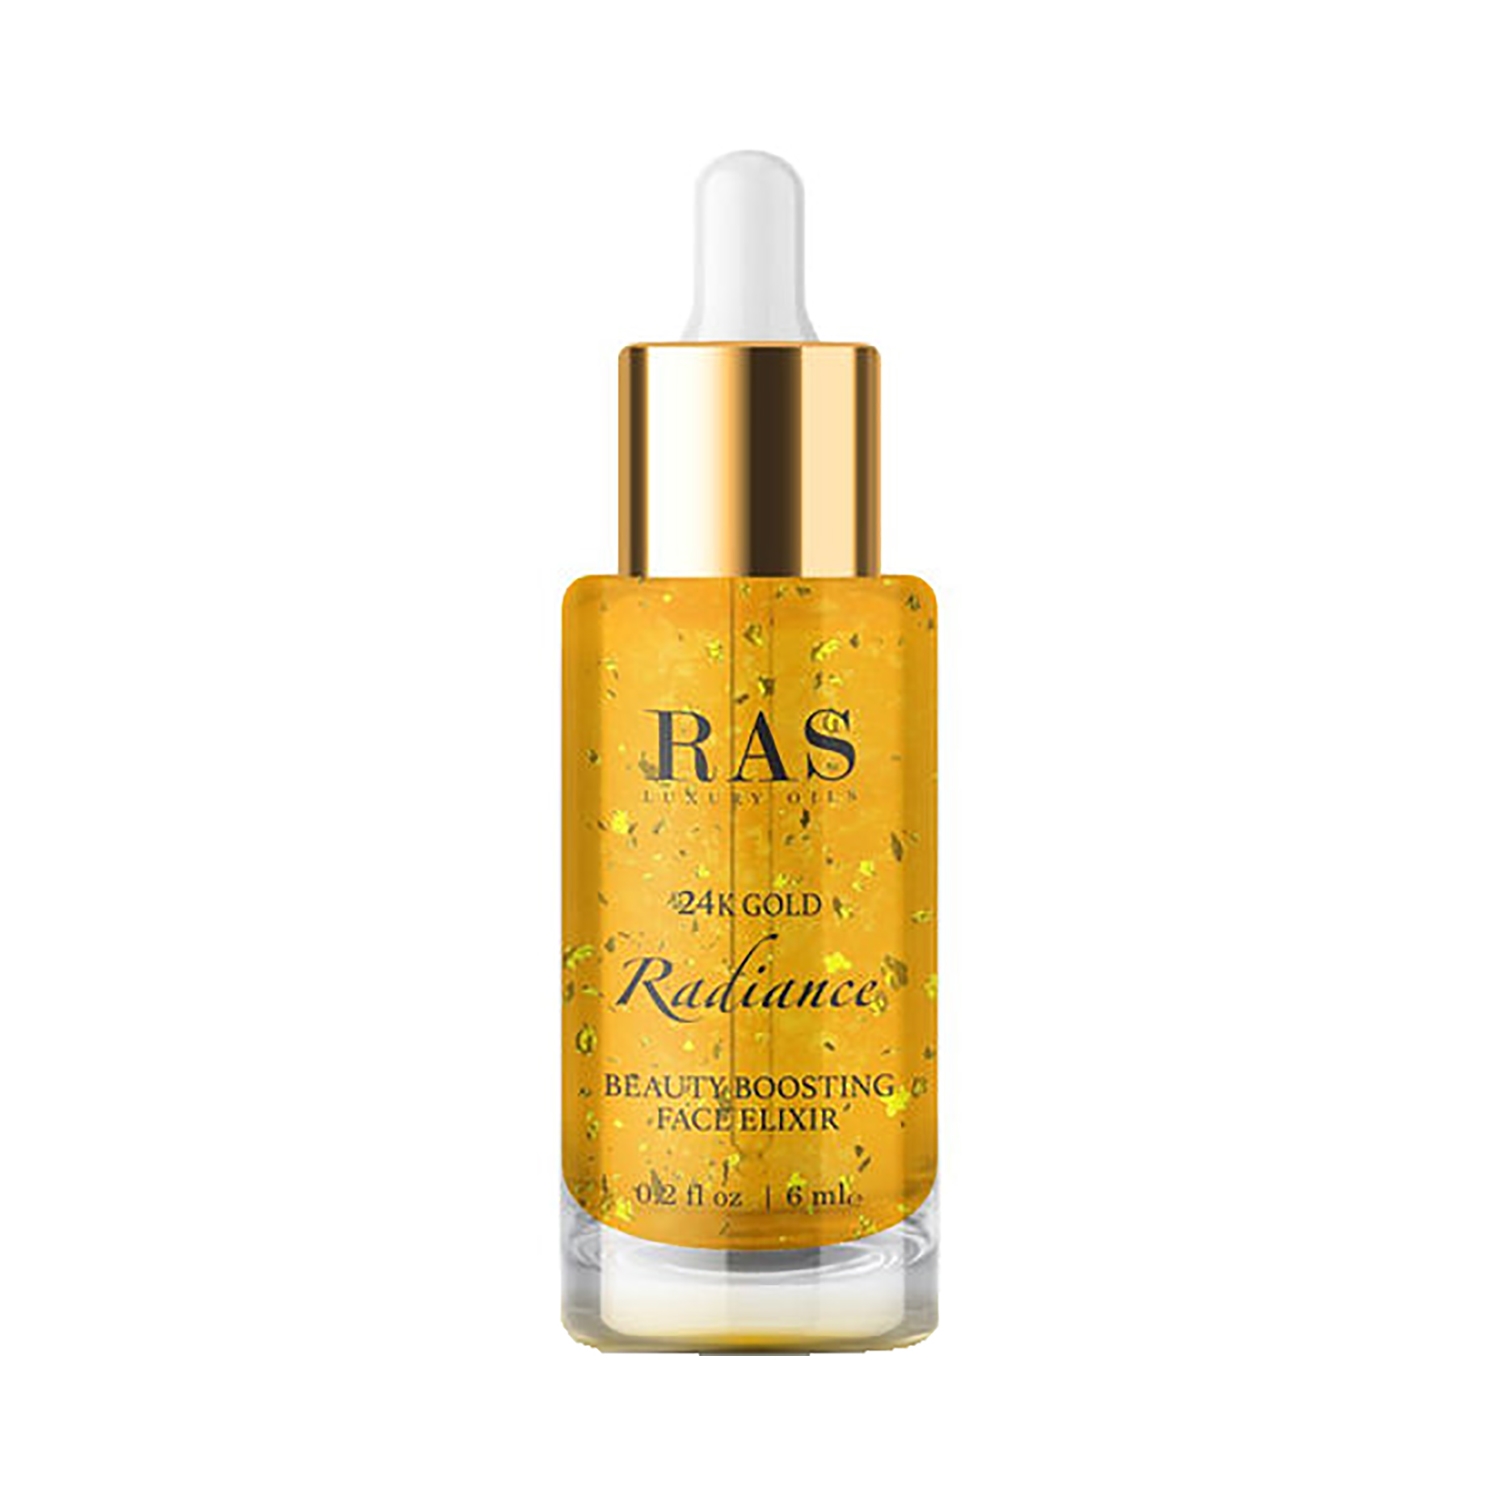 Ras Luxury Oils 24K Gold Vibrating Face Massager